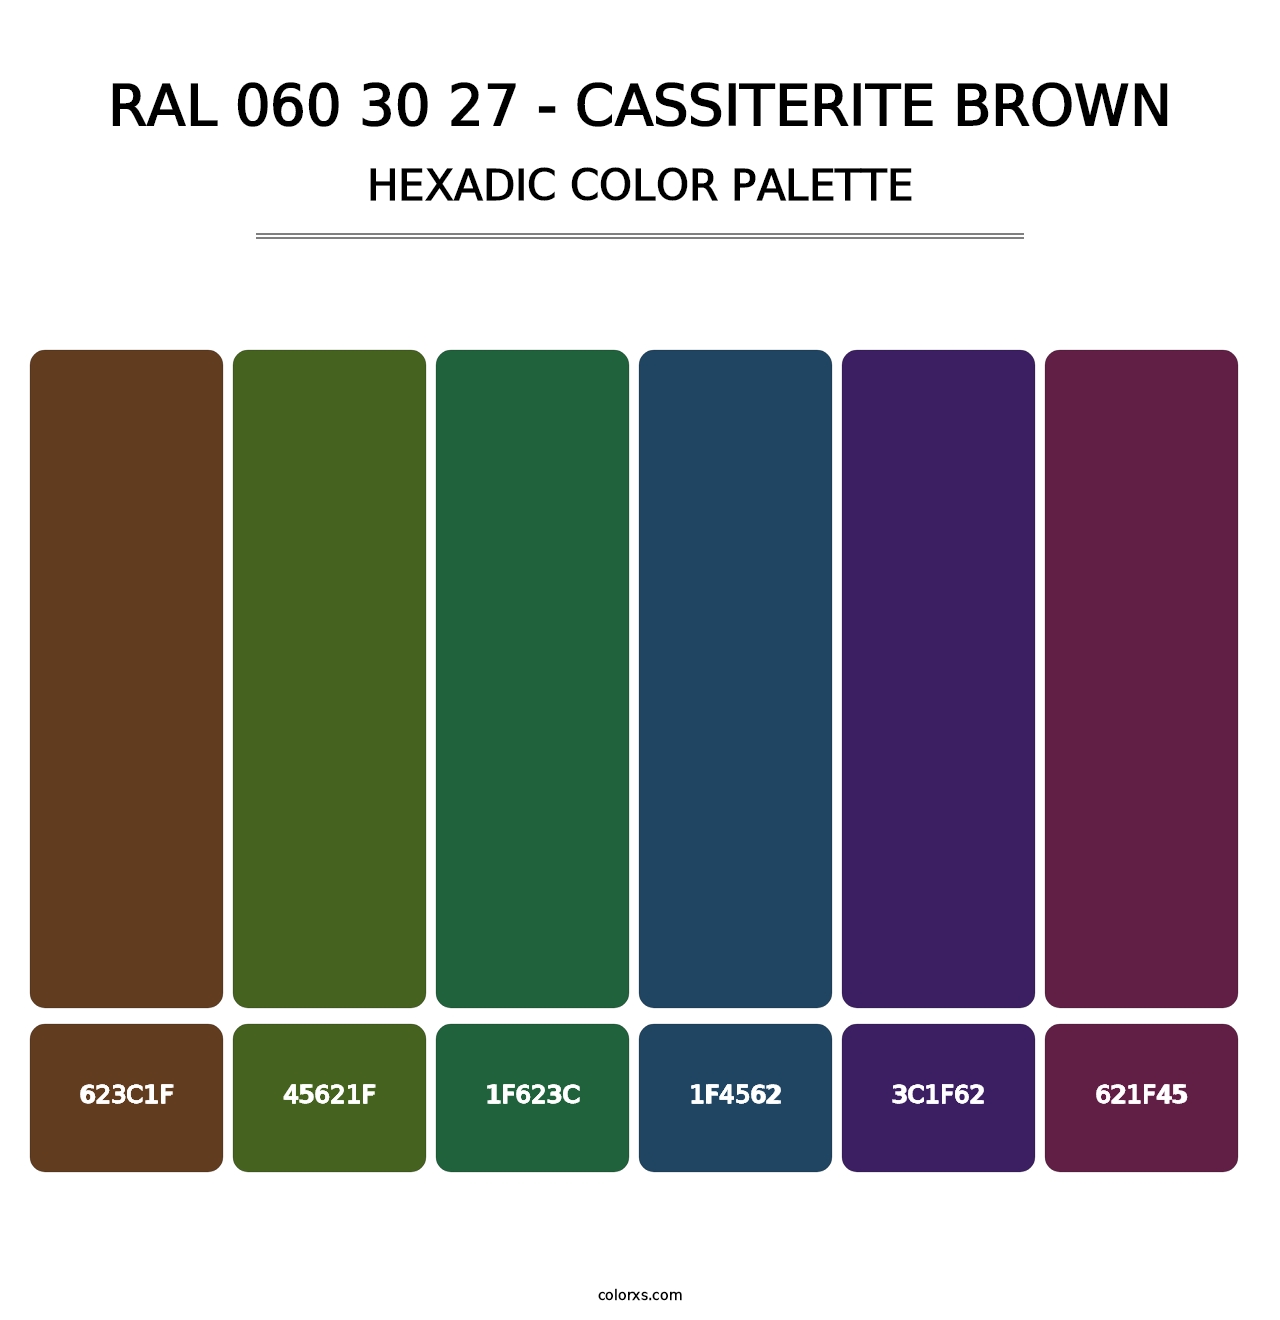 RAL 060 30 27 - Cassiterite Brown - Hexadic Color Palette